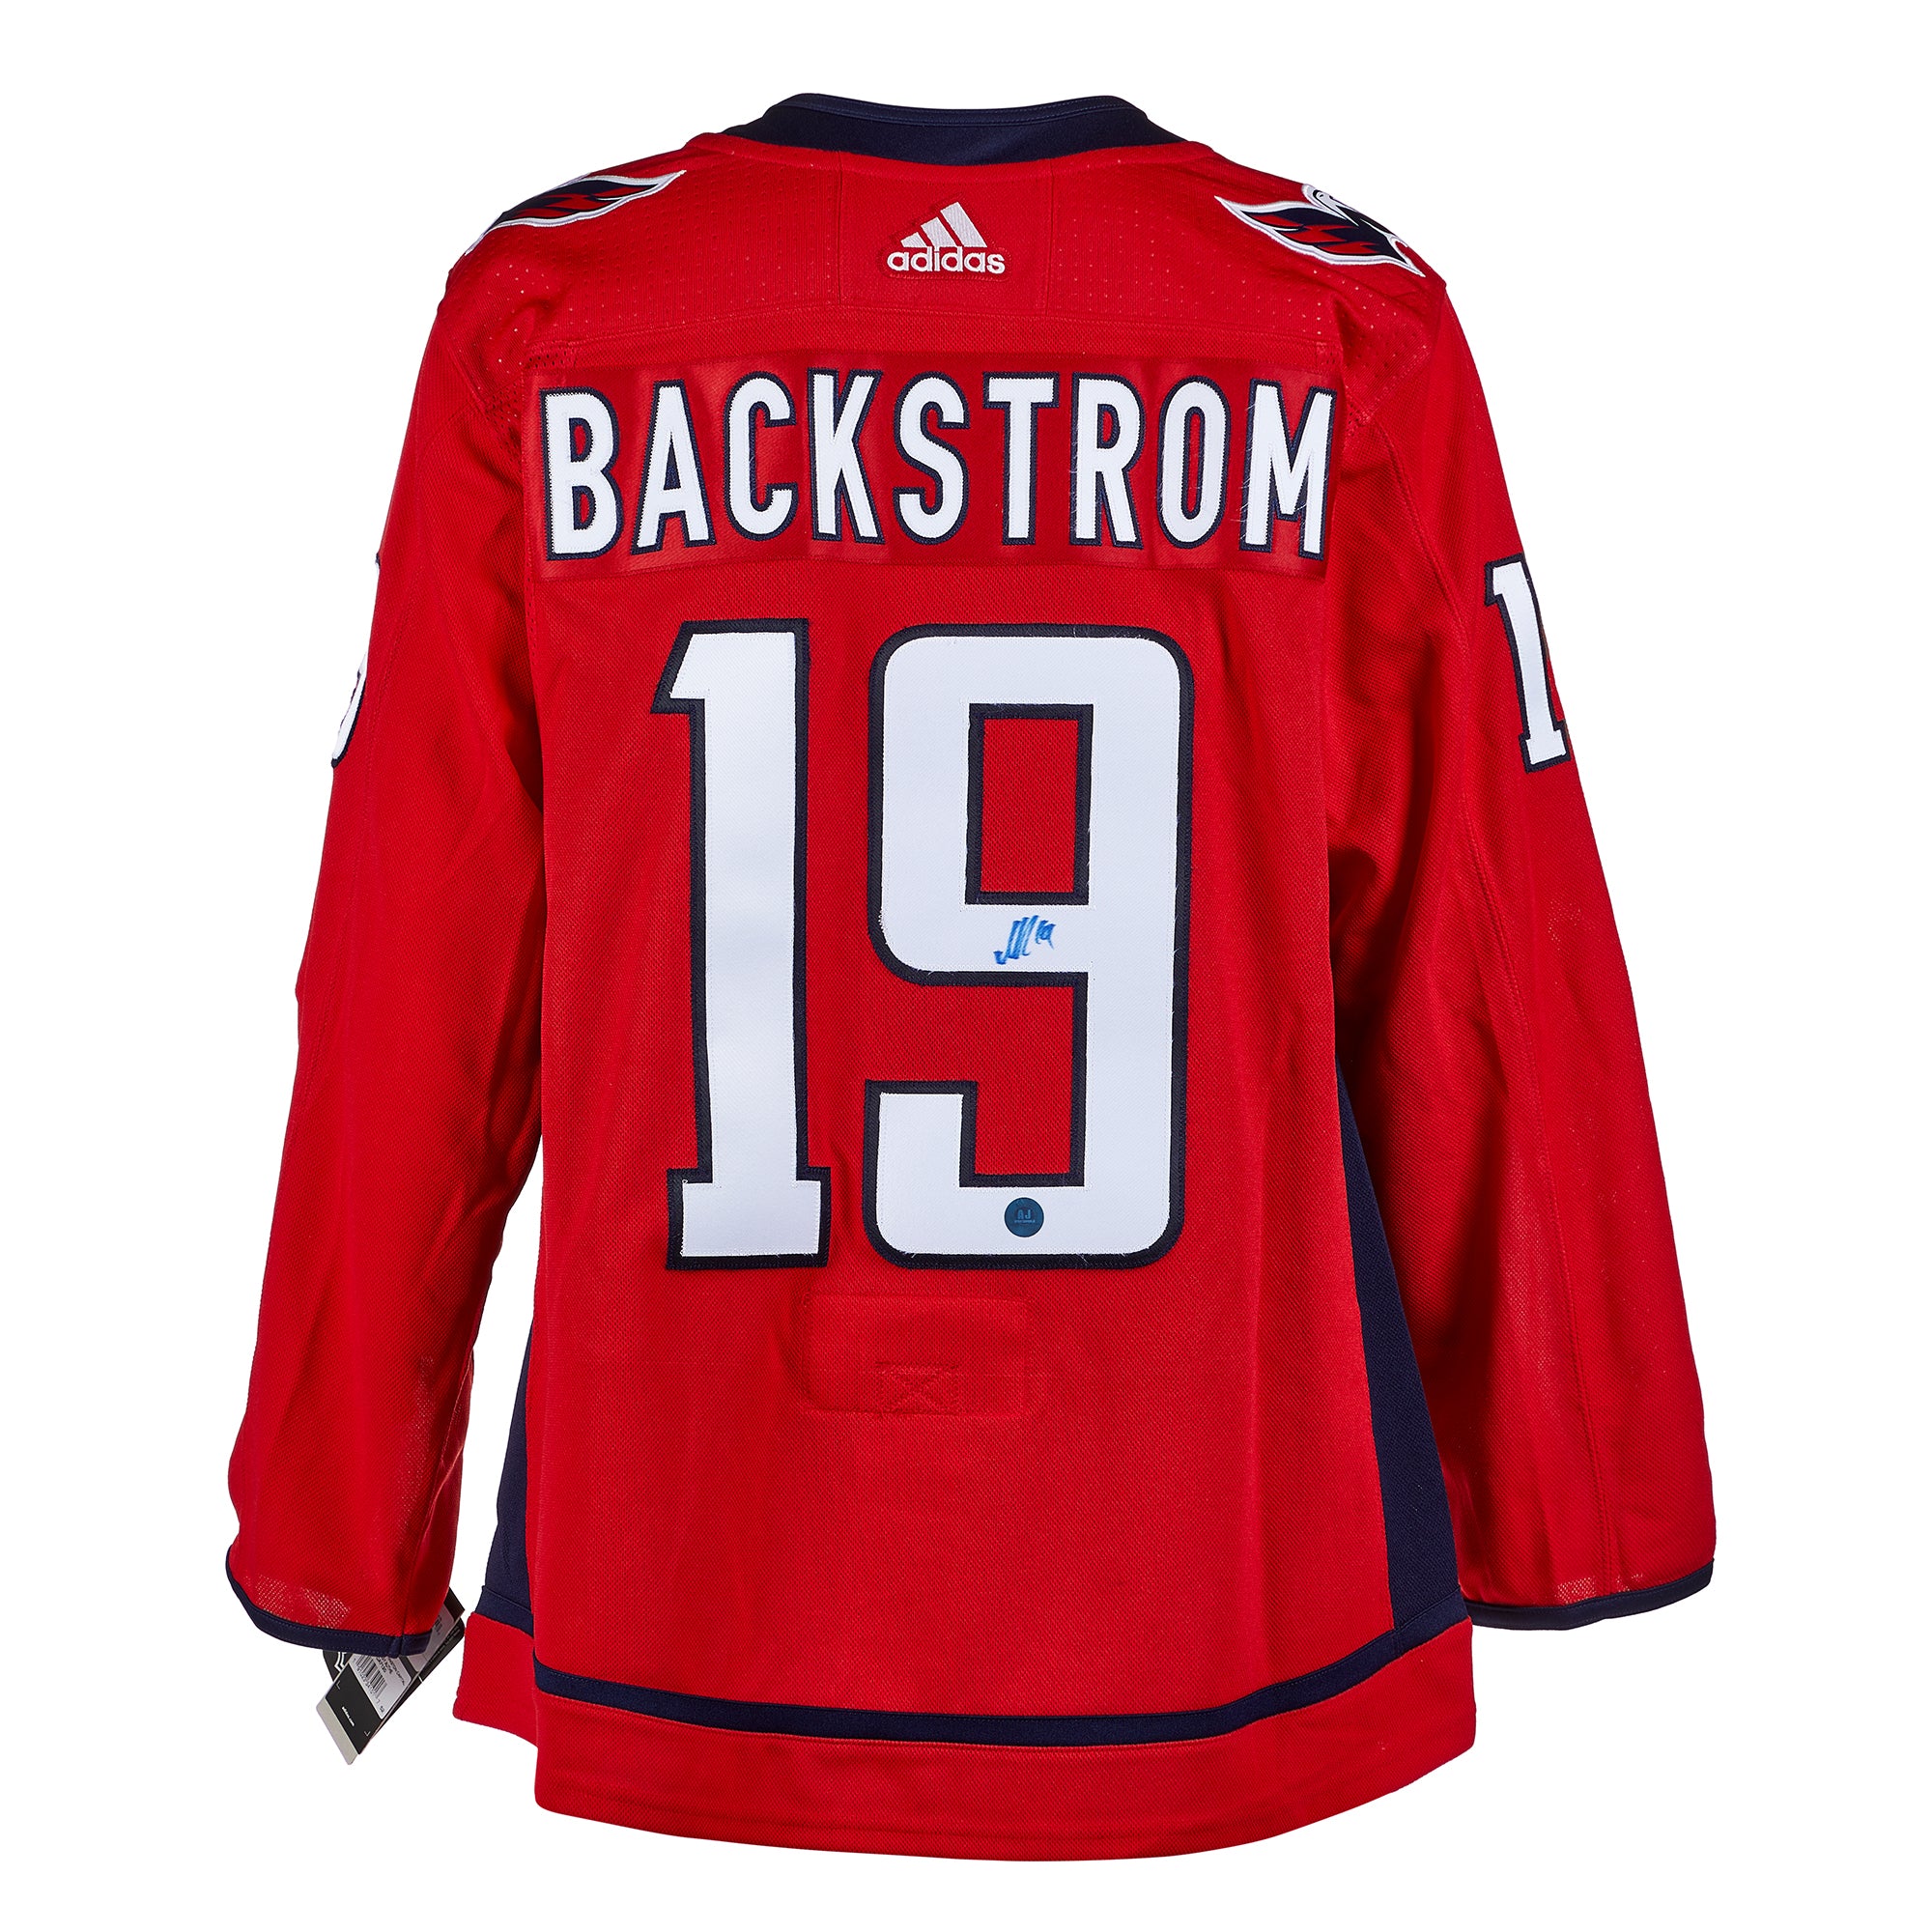 Nicklas Backstrom Washington Capitals Autographed Hockey Puck